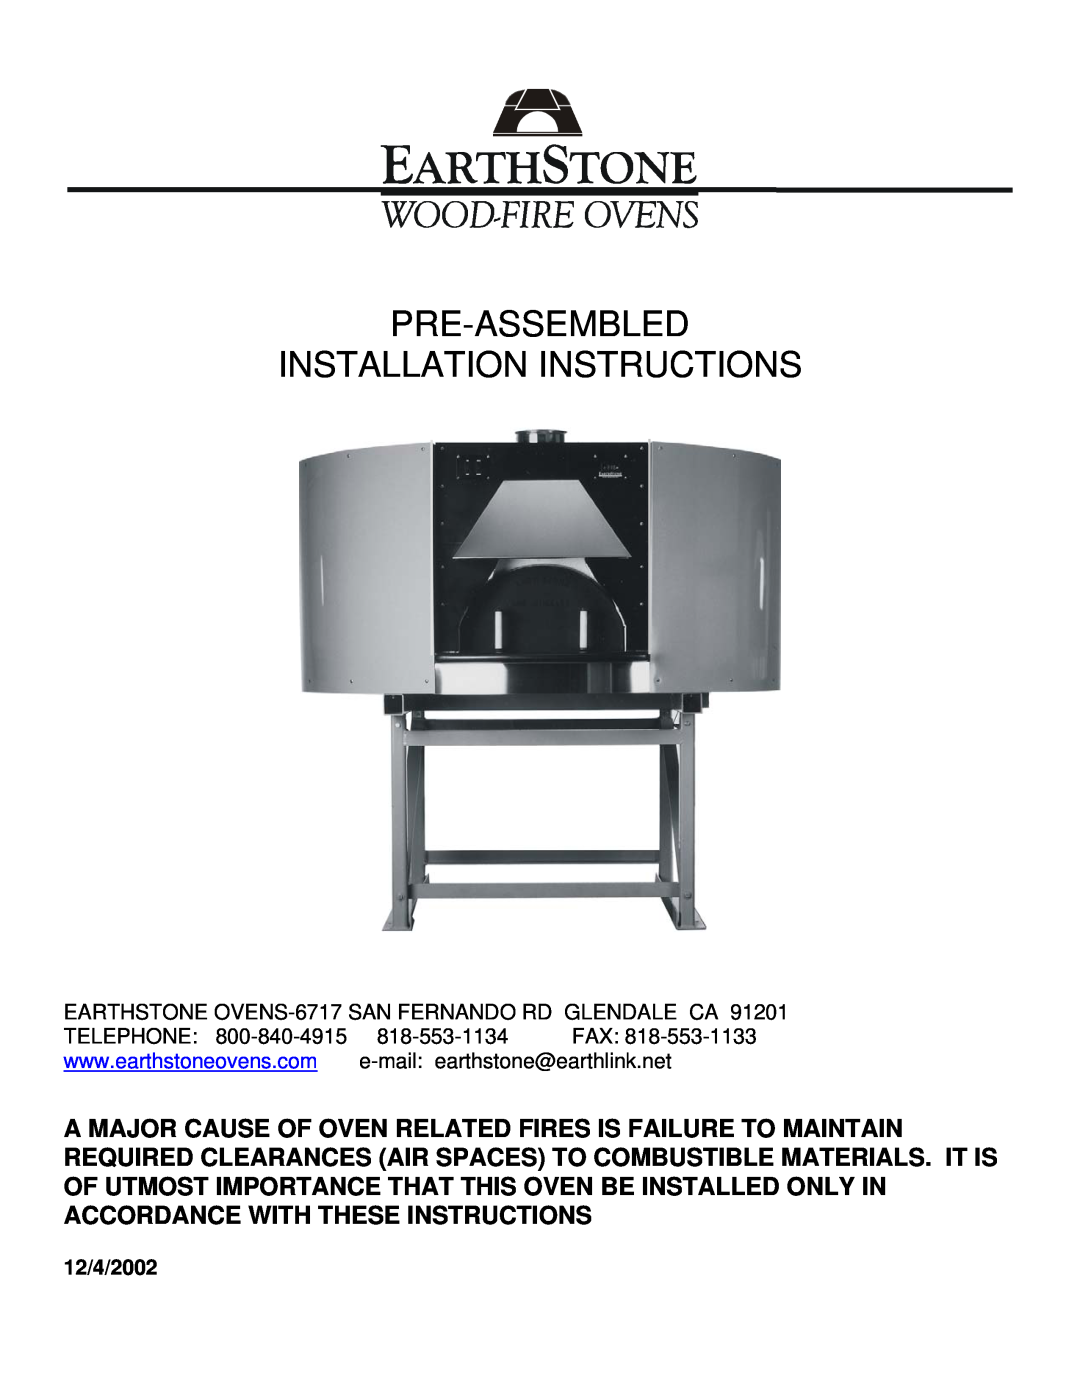 EarthStone woofire oven installation instructions Pre-Assembled Installation Instructions, 12/4/2002 